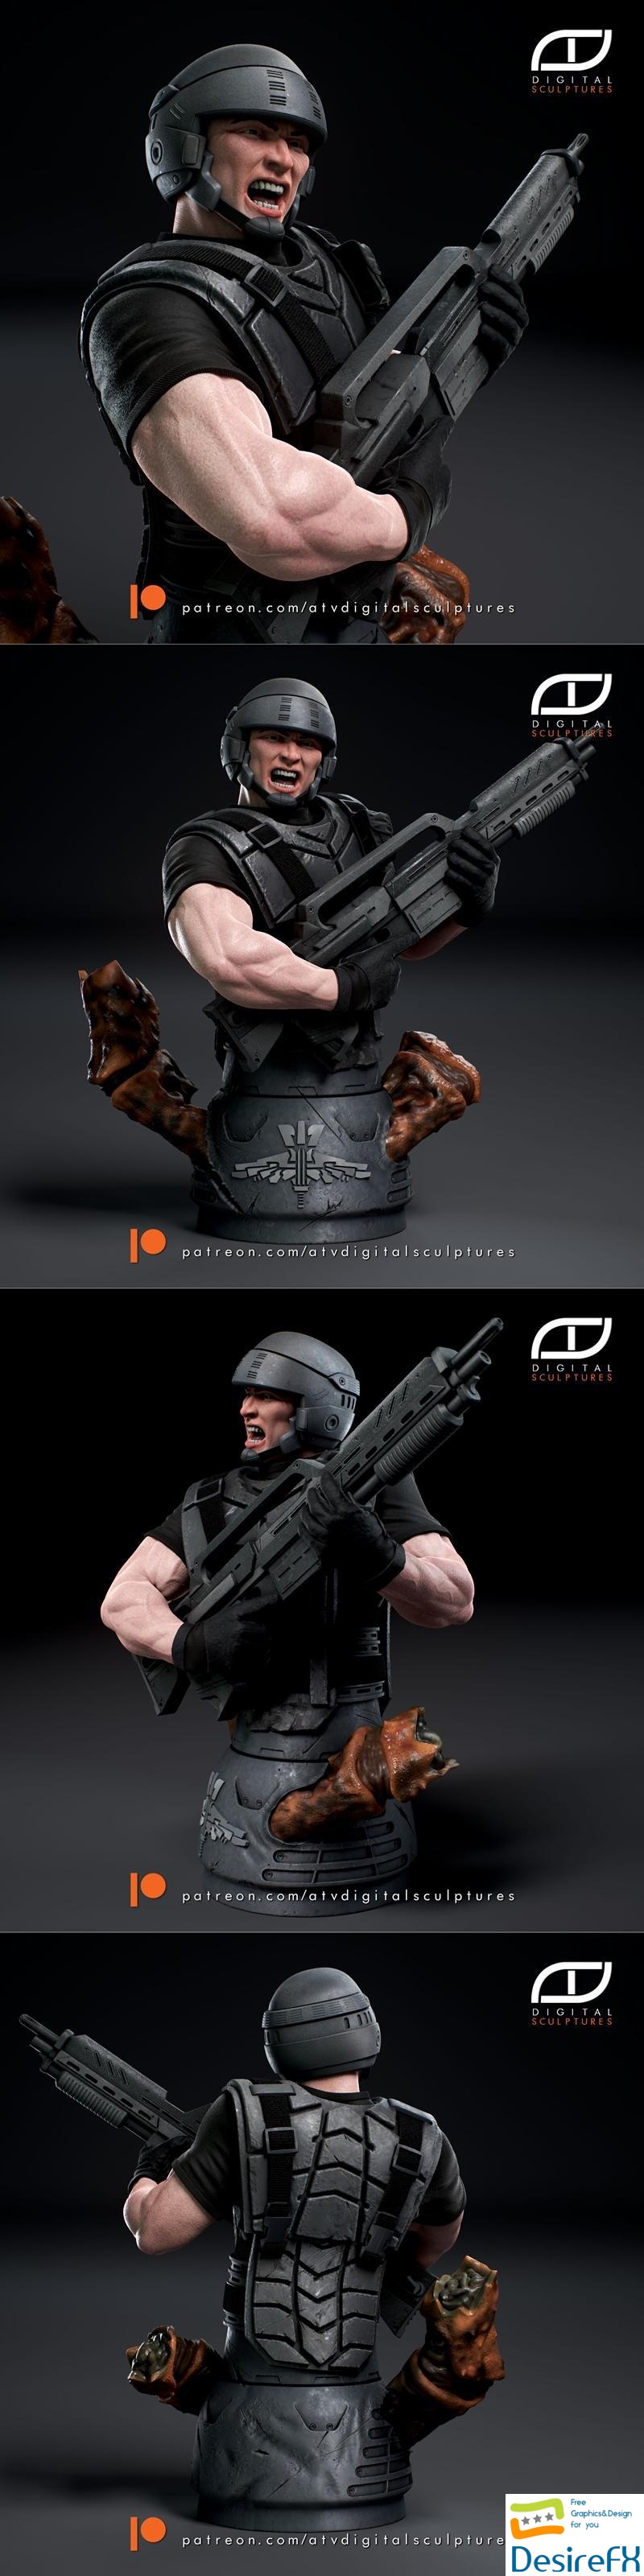 ATV Digital Sculptures - Starship Troopers Bust 3D Print